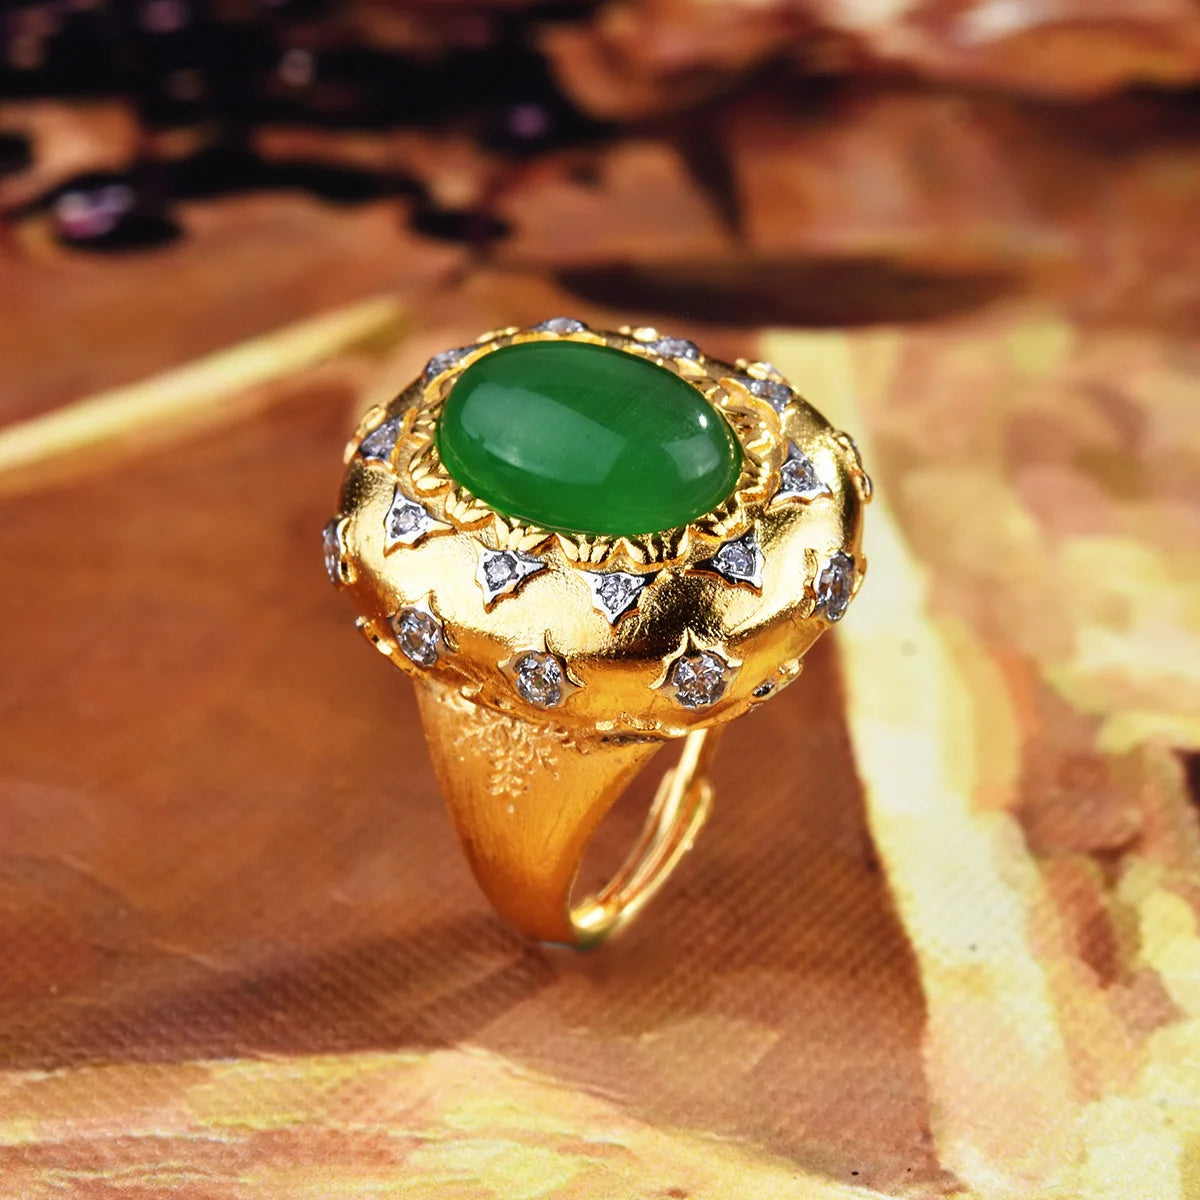 Italian Vintage Jewelry Luxury Emerald Green Stone RingsGreenresizable